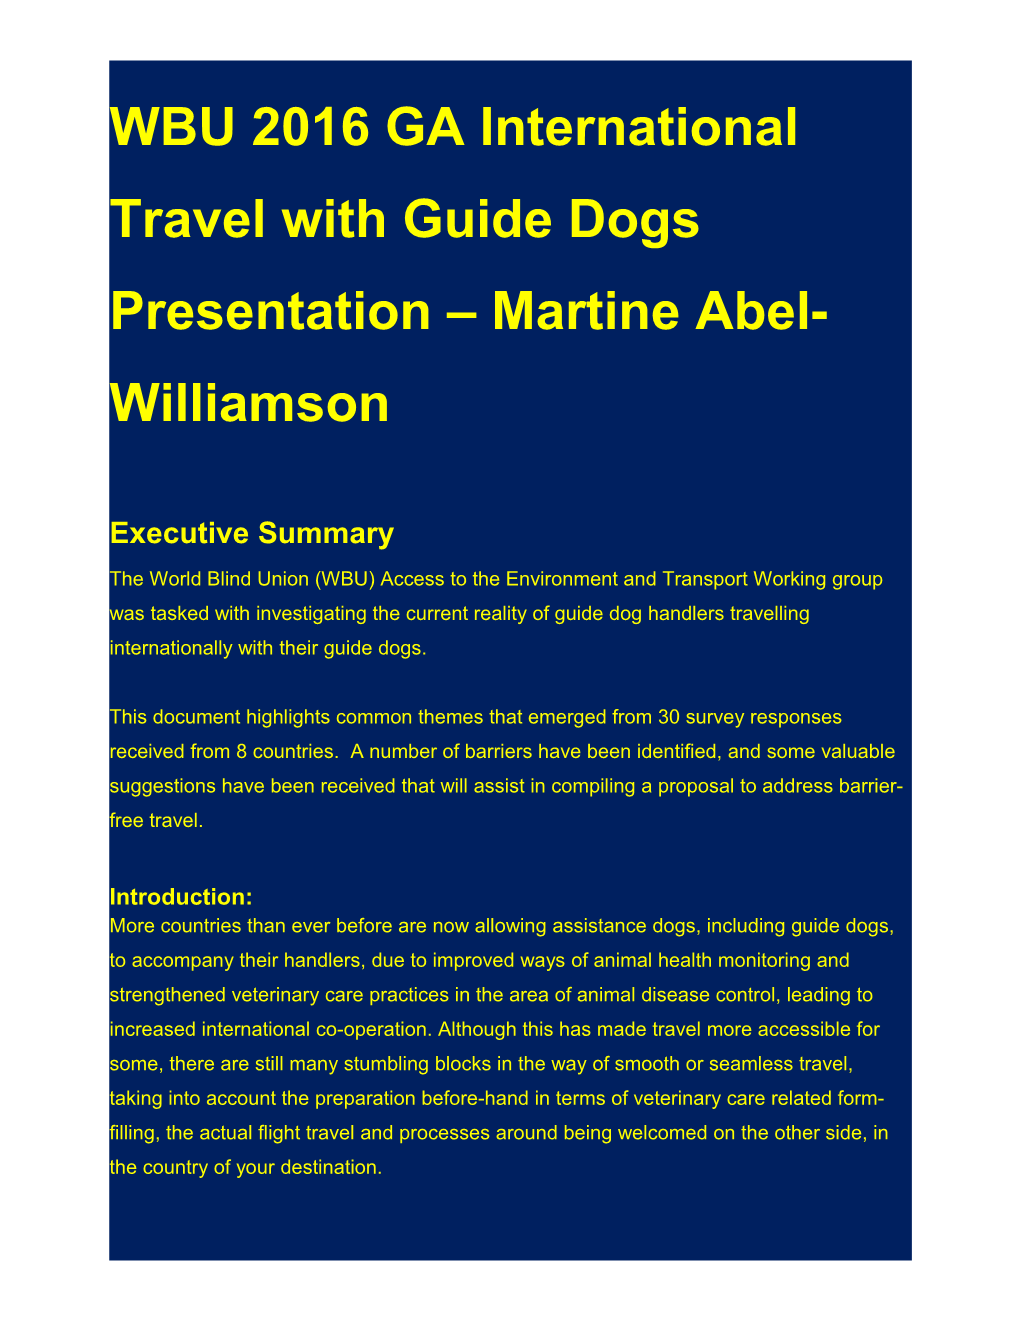 International Travel with Guide Dog - Martine Abel-Willianson